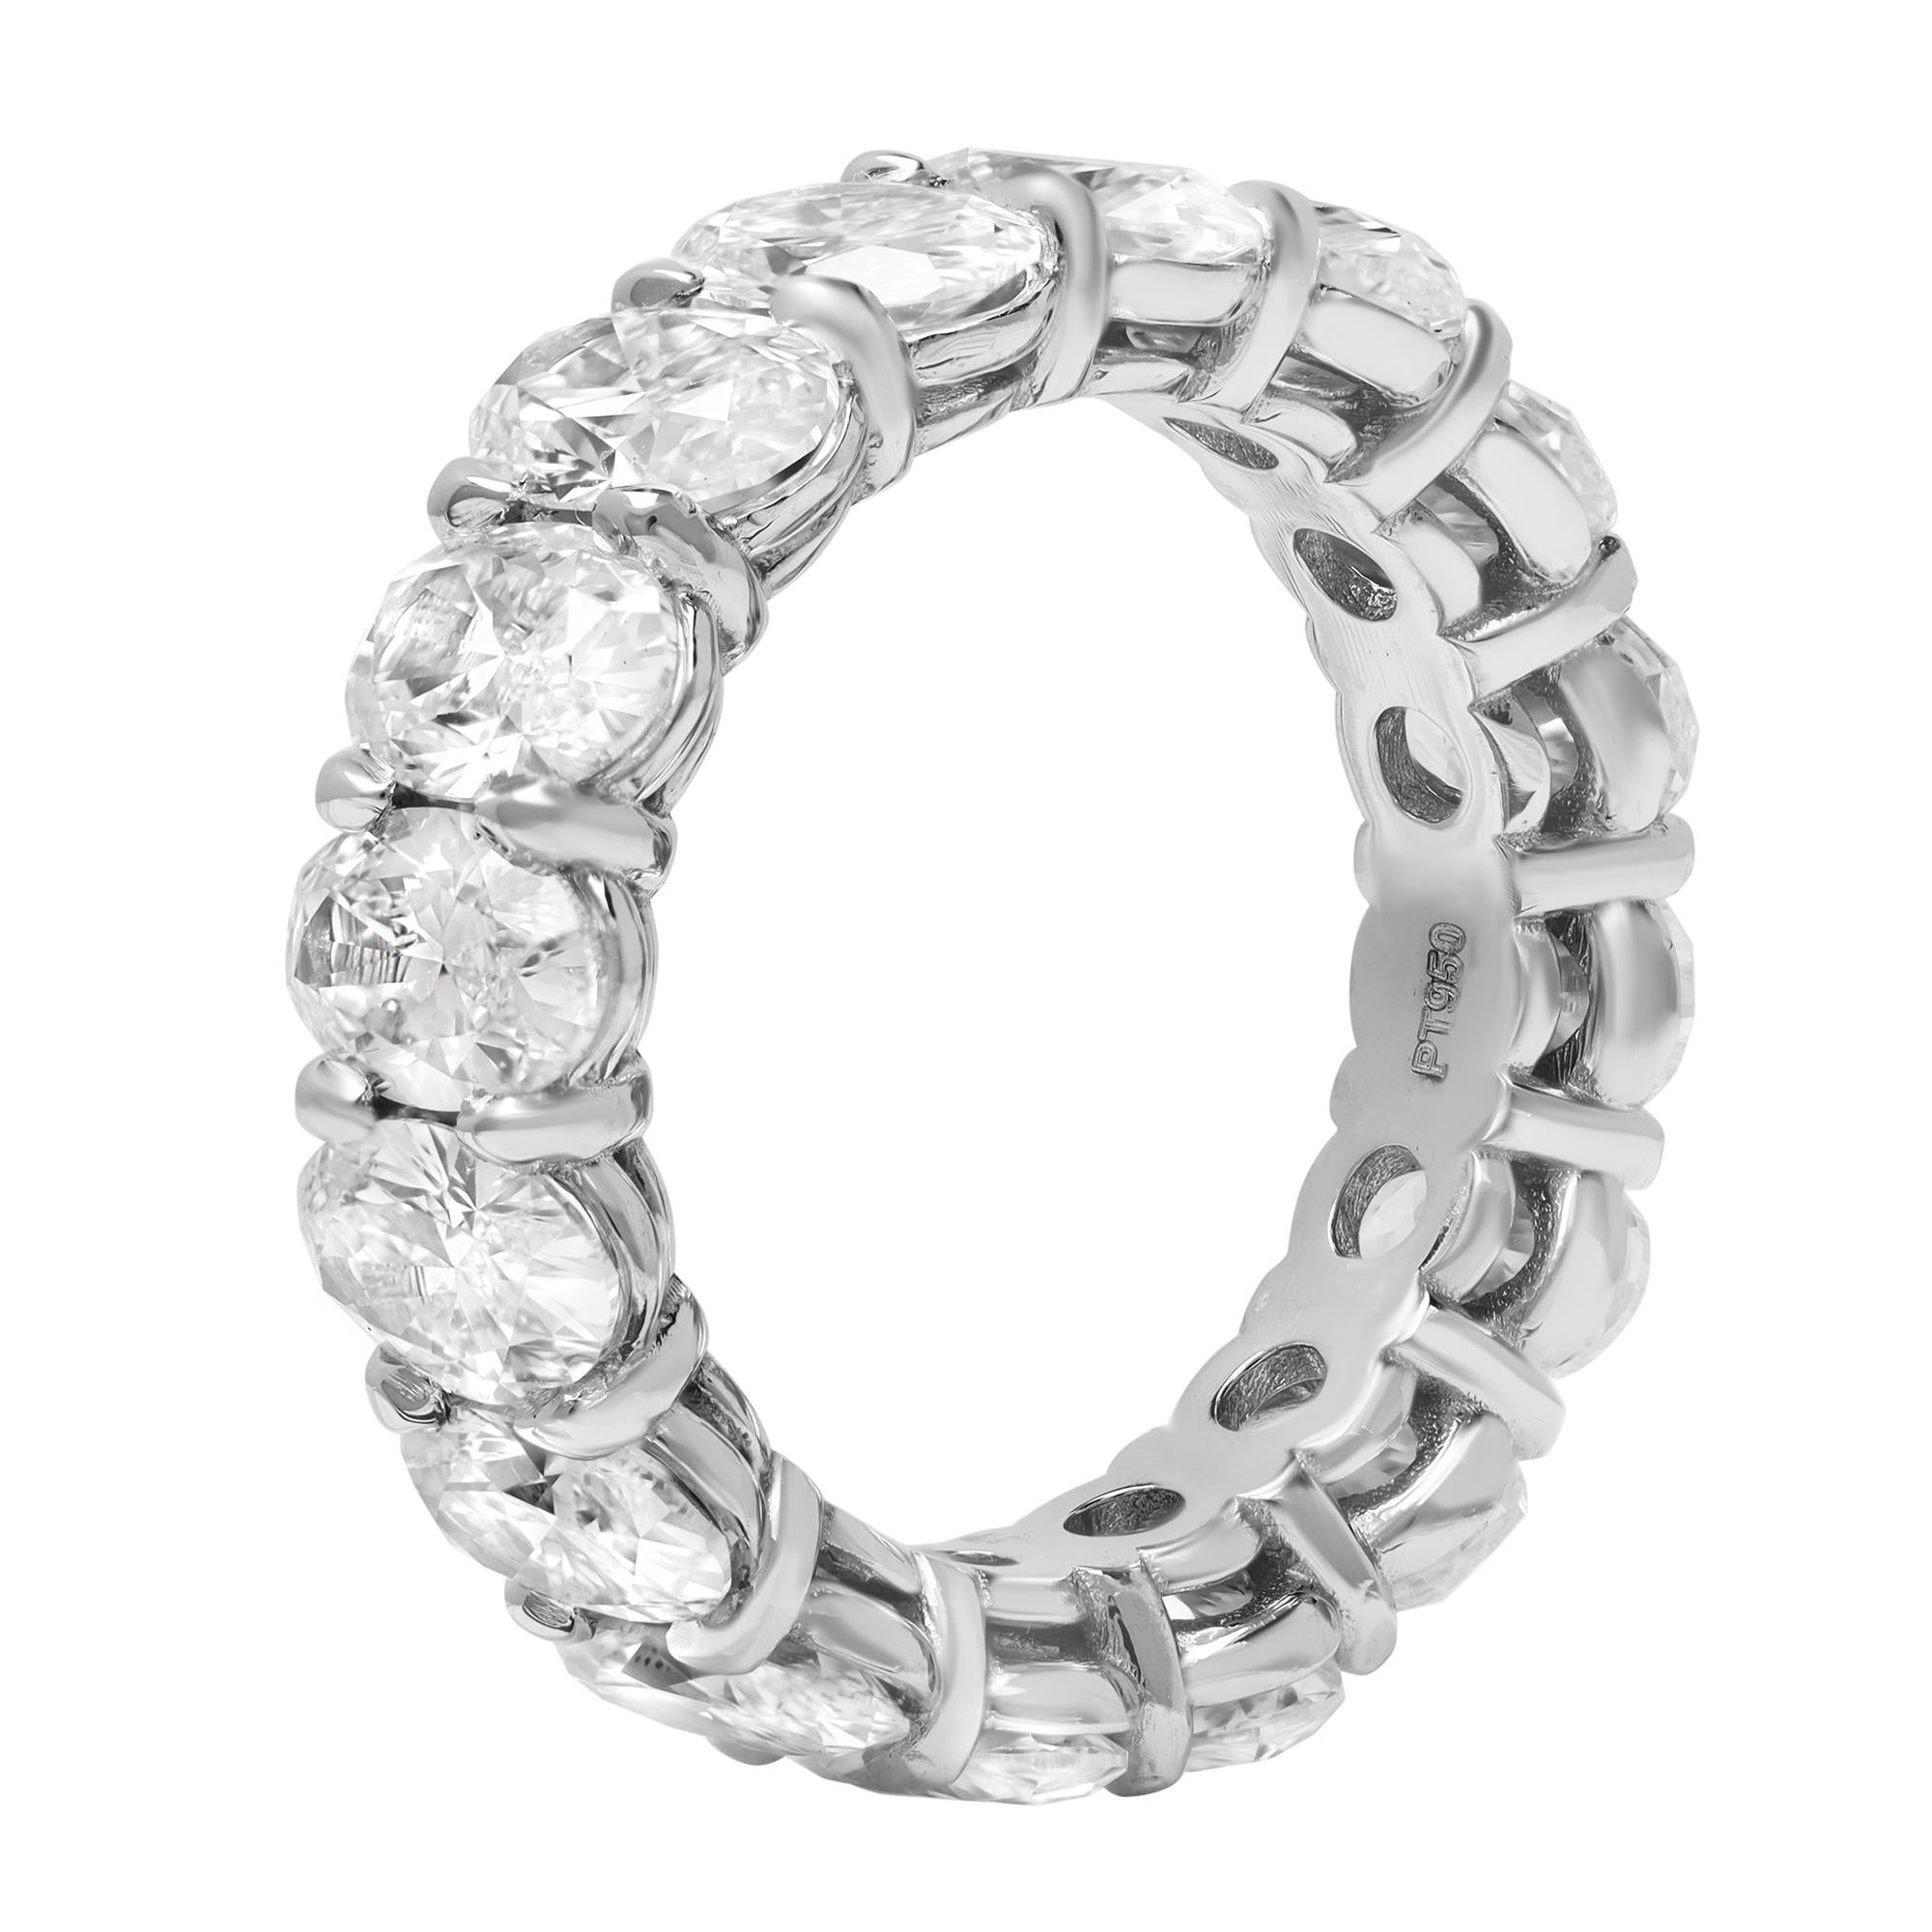 Oval Cut Rachel Koen Oval Diamond Eternity Band Ring Platinum 6.77cttw For Sale